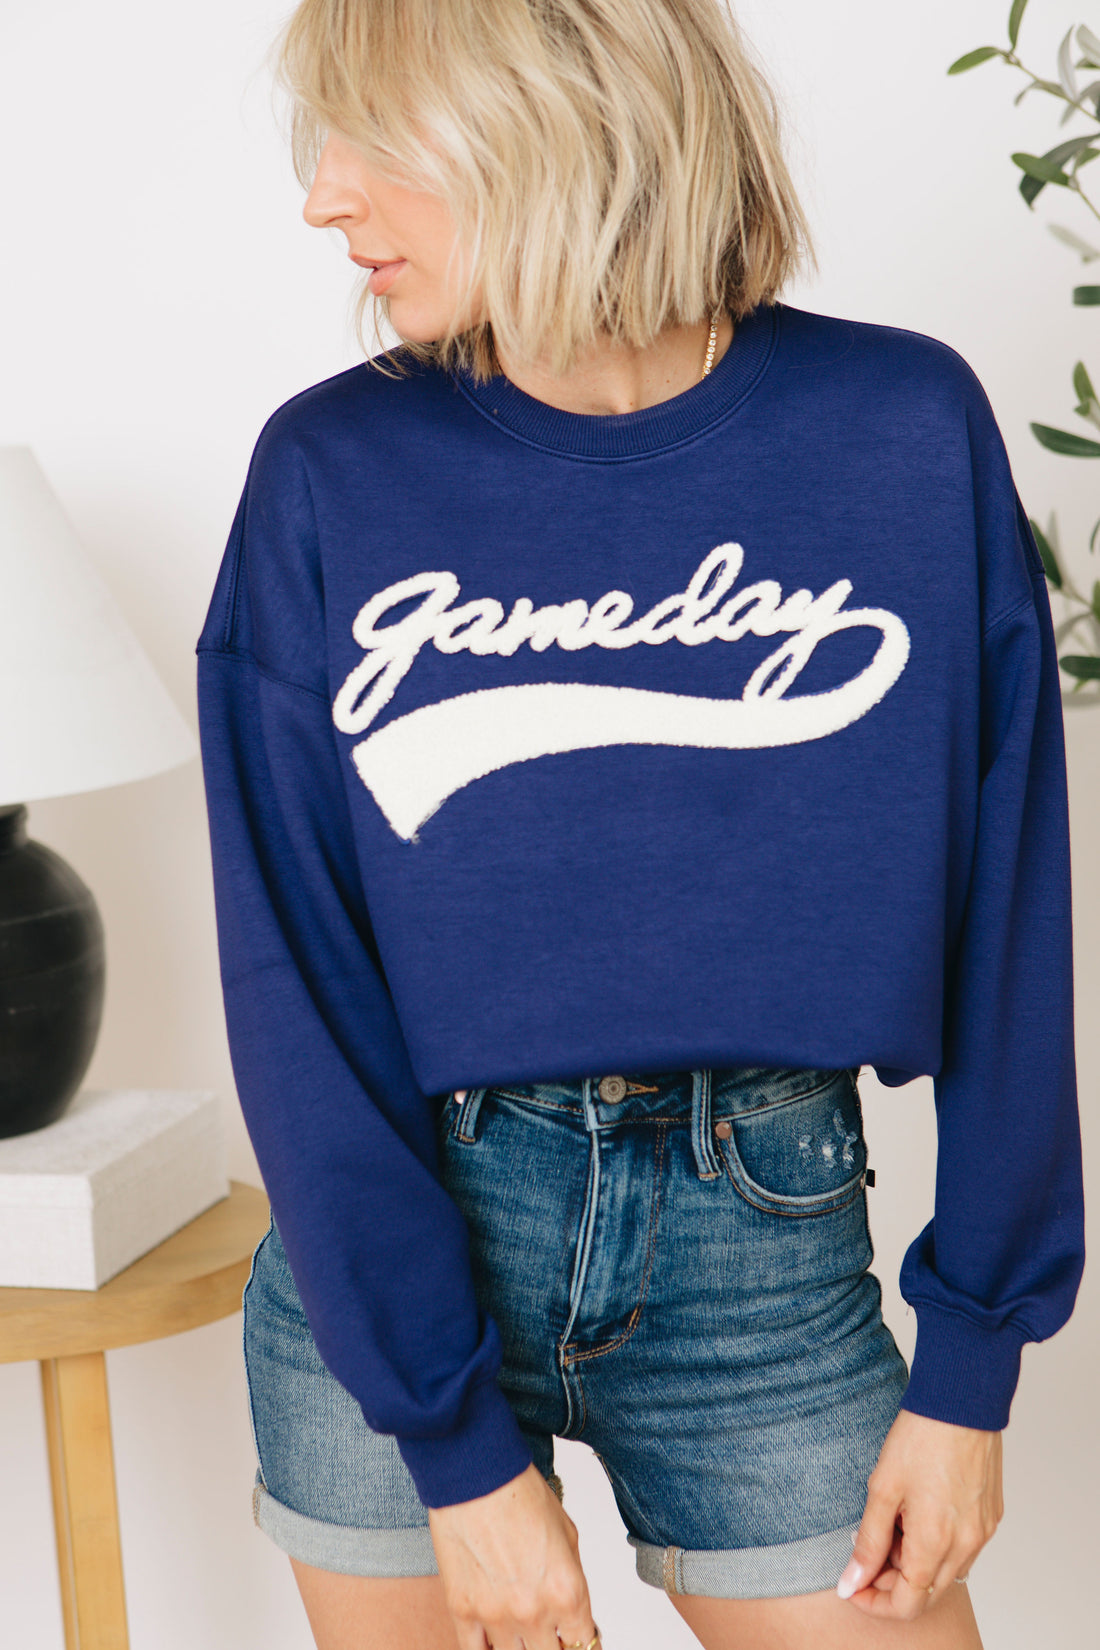 Game Day Graphic Sweatshirt (S-L)